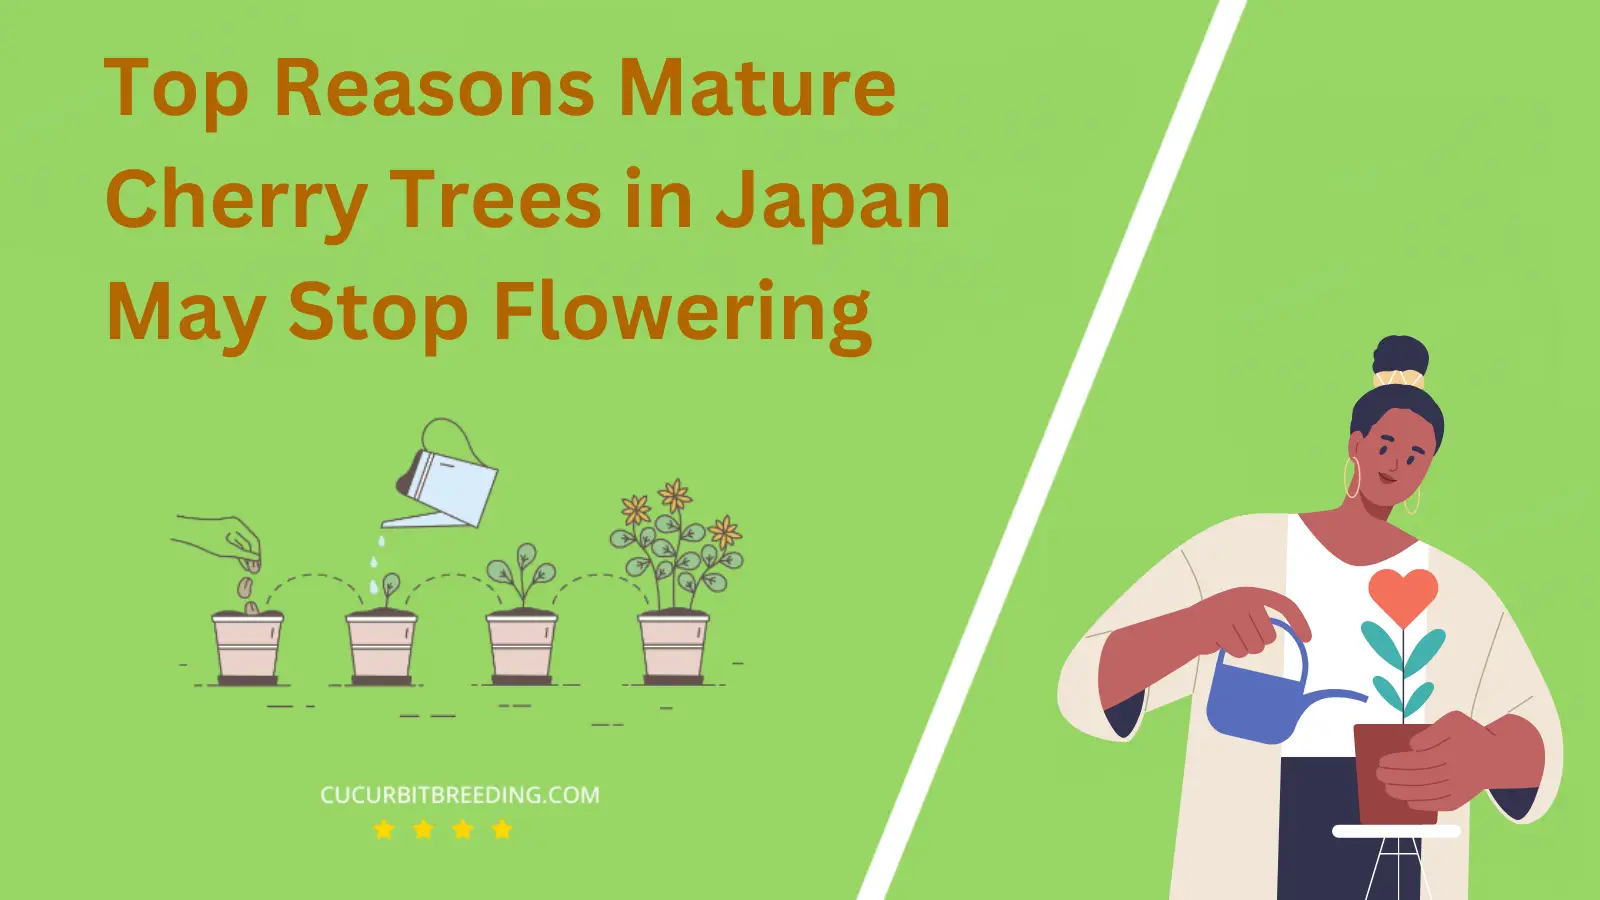 Top Reasons Mature Cherry Trees in Japan May Stop Flowering